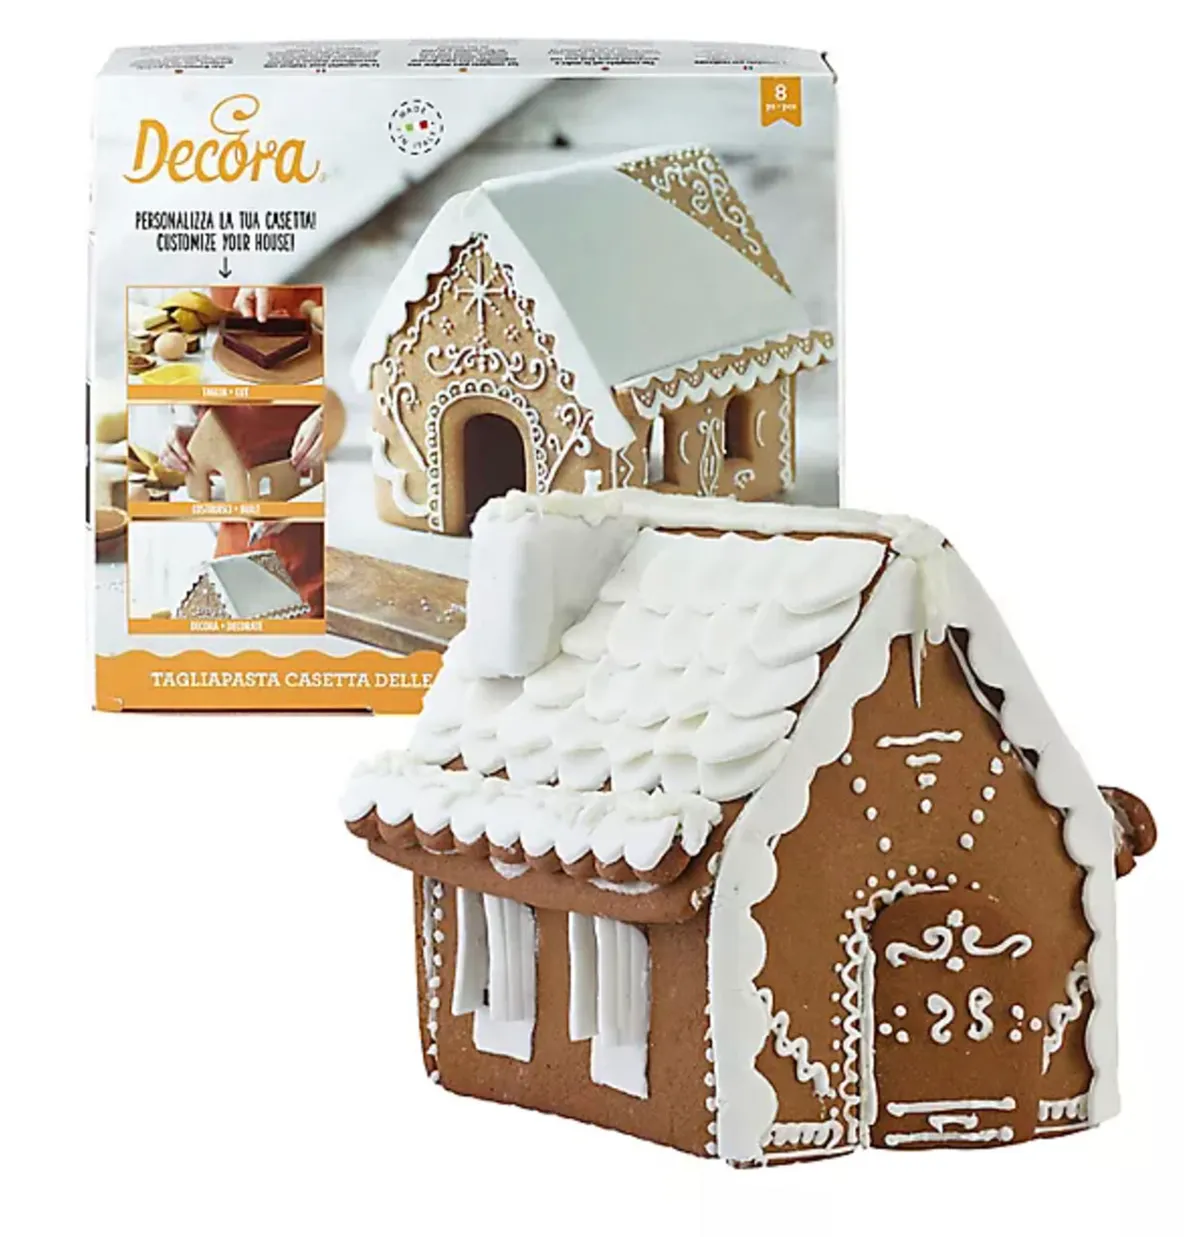 Decora gingerbread house kit